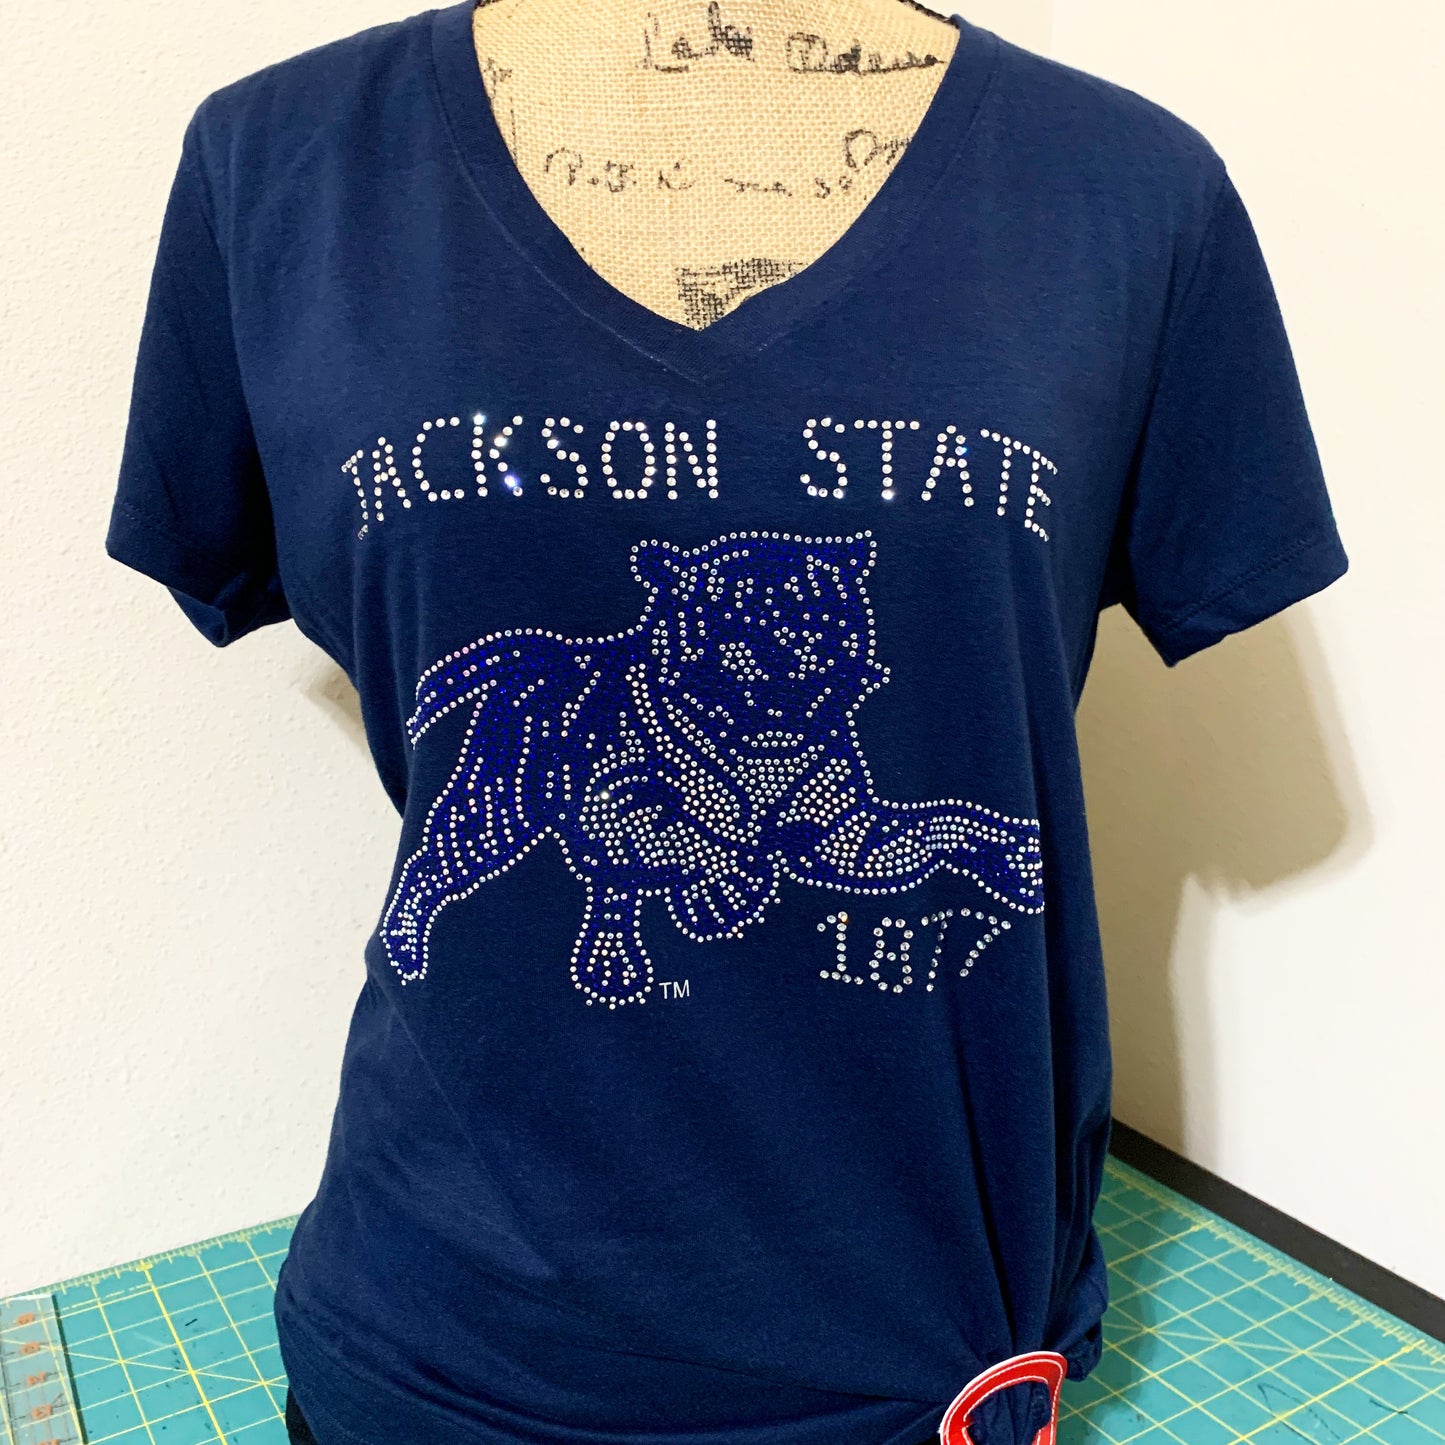 Jackson State Tigers 1877 Rhinestone Shirt